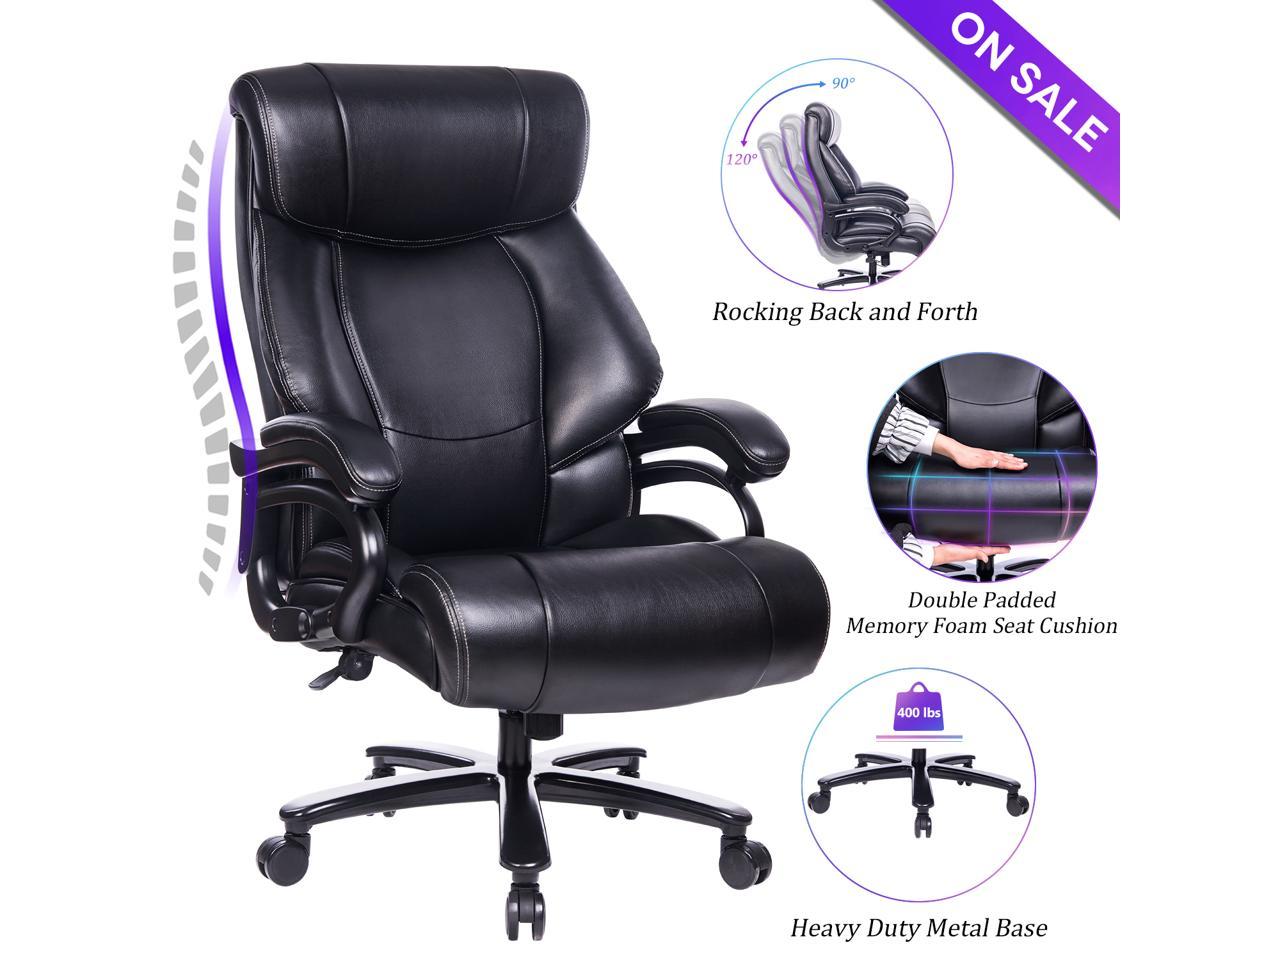 Adjustable Headrest and Arms 90°-120° Tilt Lock Black Adjustable Lumbar Support Computer Desk Task Executive Chair VANBOW High Back Mesh Office Chair 